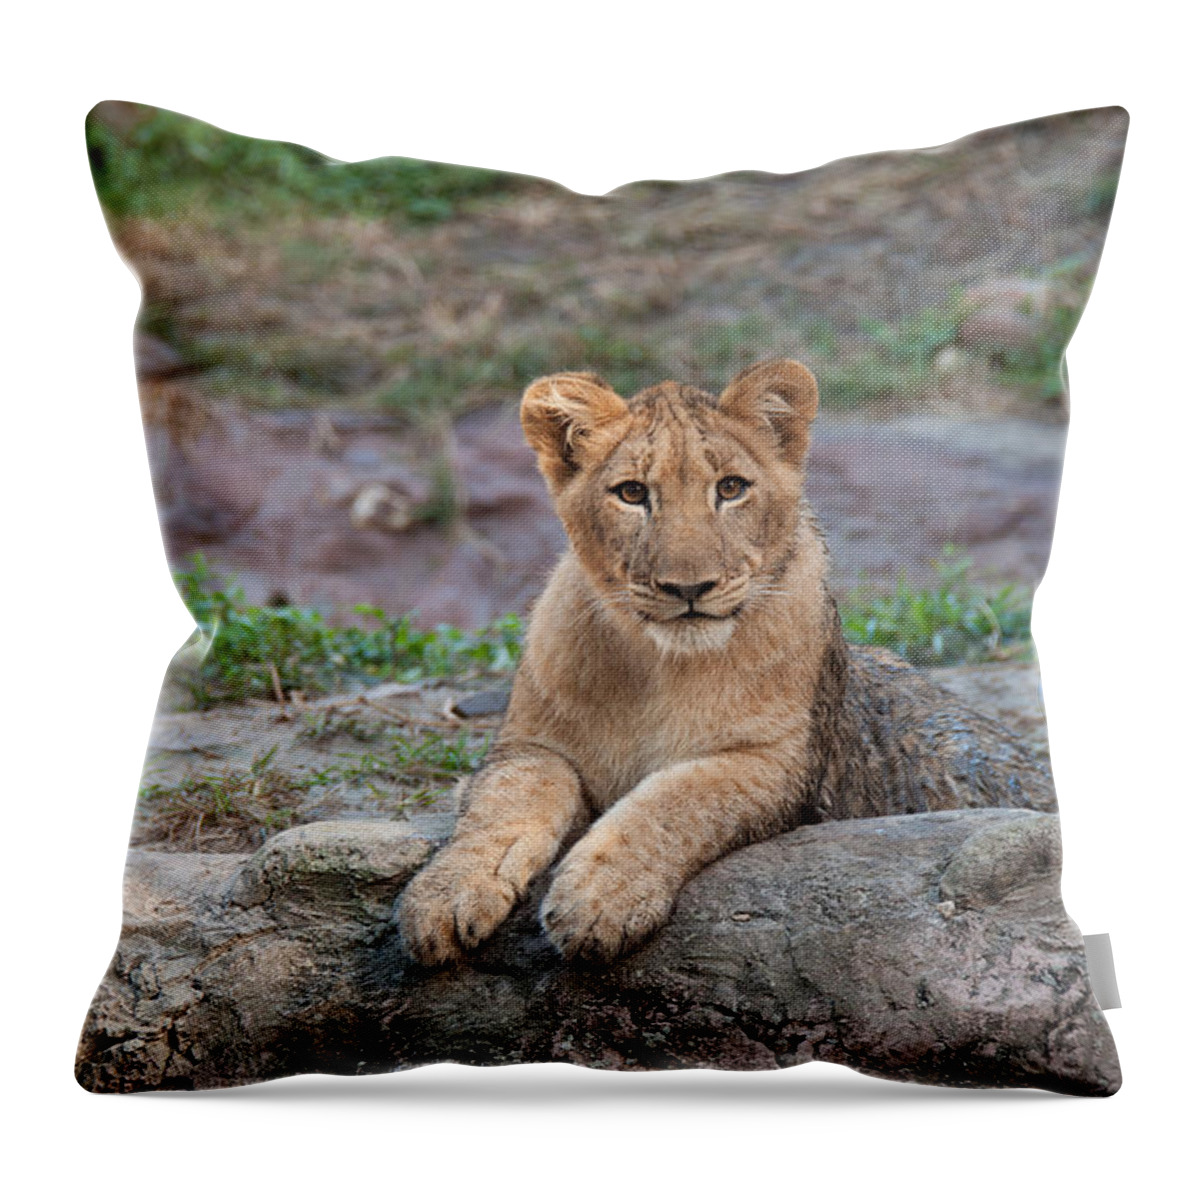 Lion Cub Throw Pillow featuring the photograph Lion Cub by John Black